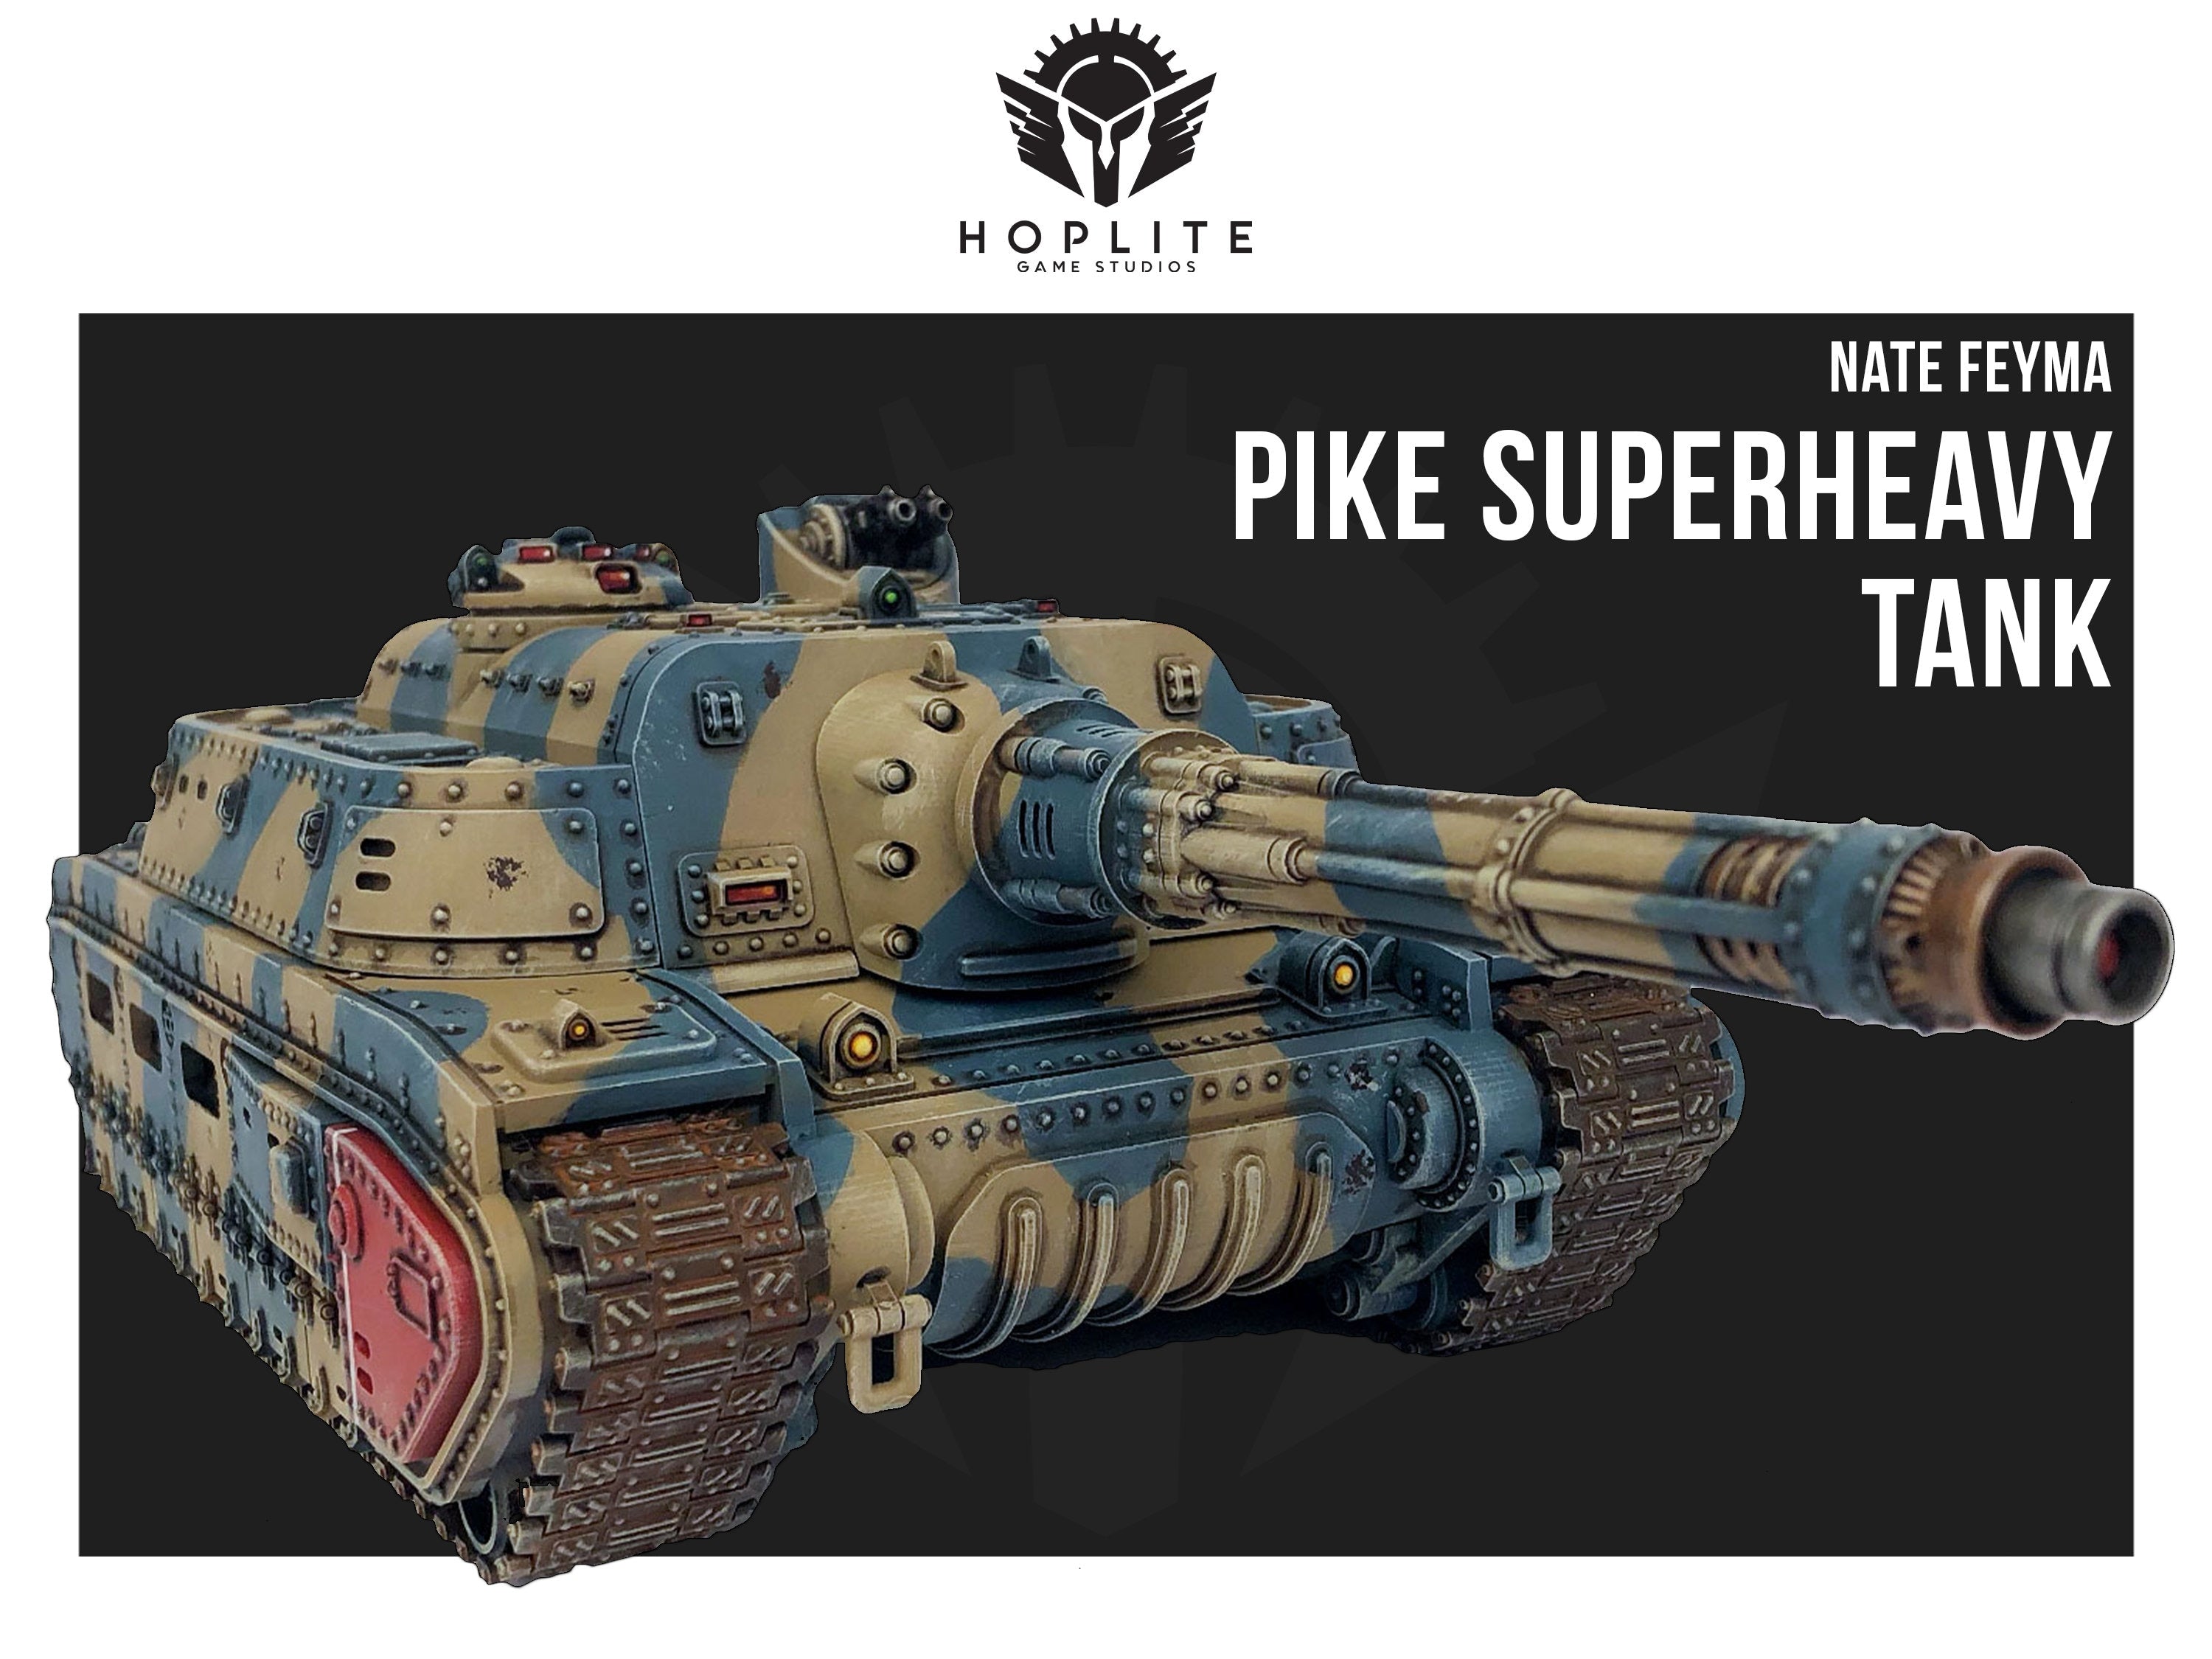 The Pike Superheavy Battle Tank